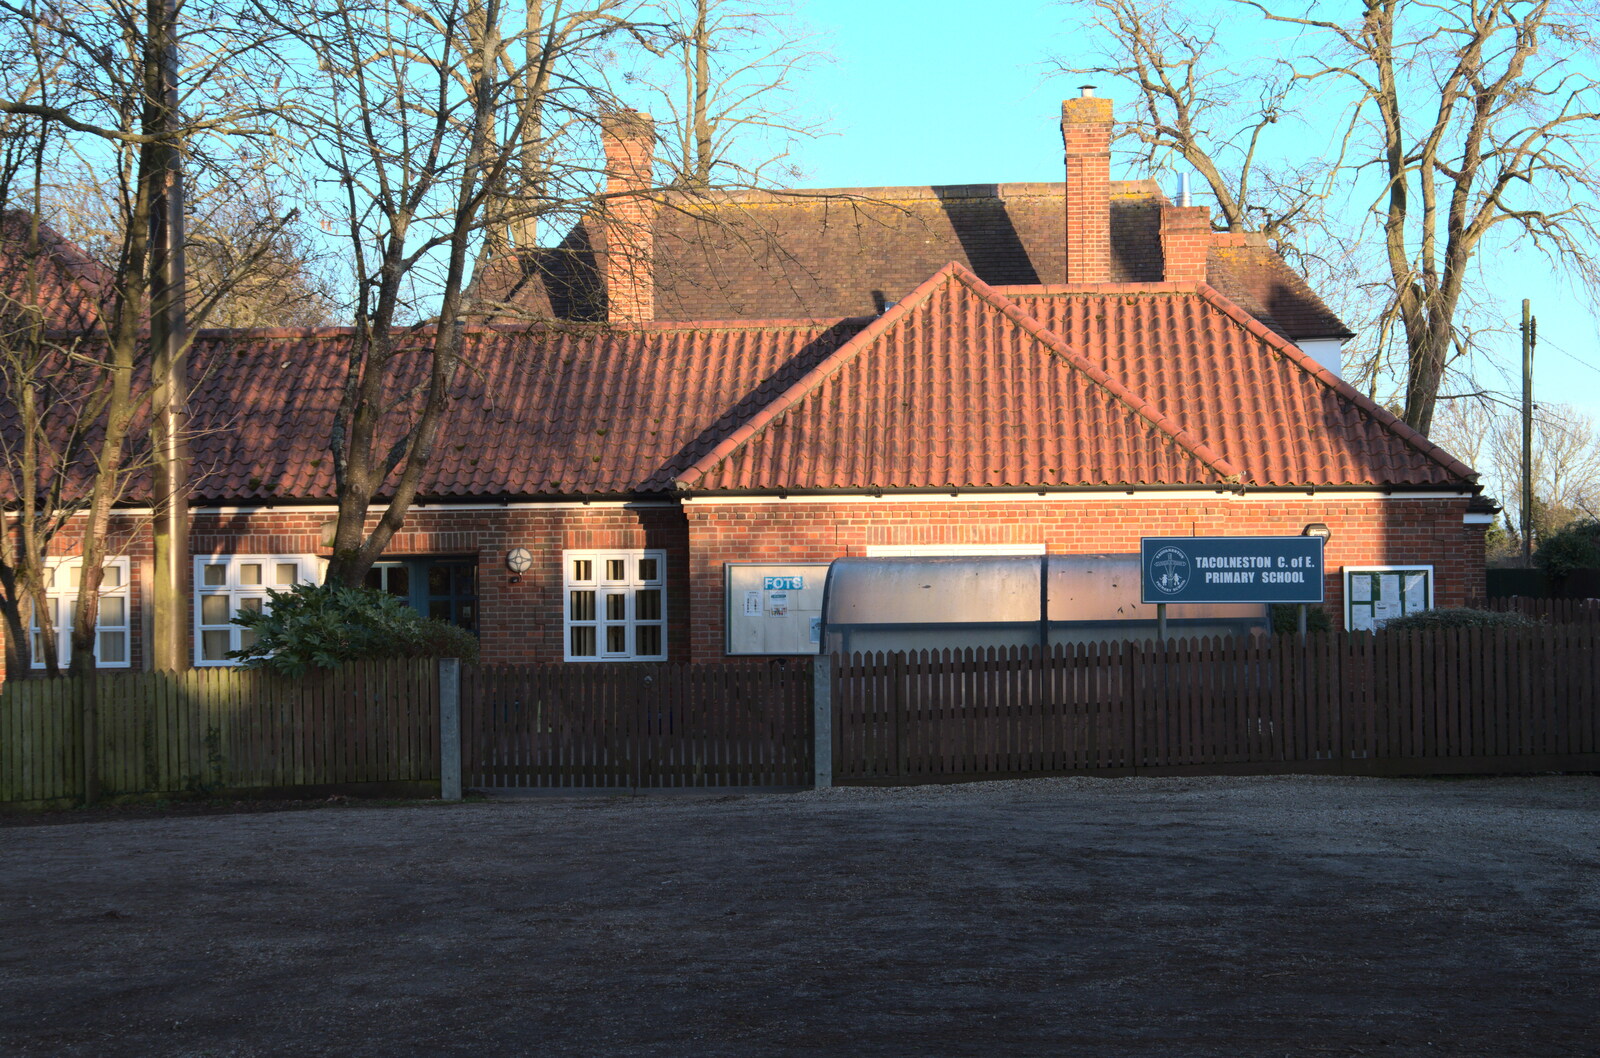 Tacolneston Primary School from Snowdrops at Talconeston Hall, Tacolneston, Norfolk - 7th February 2020